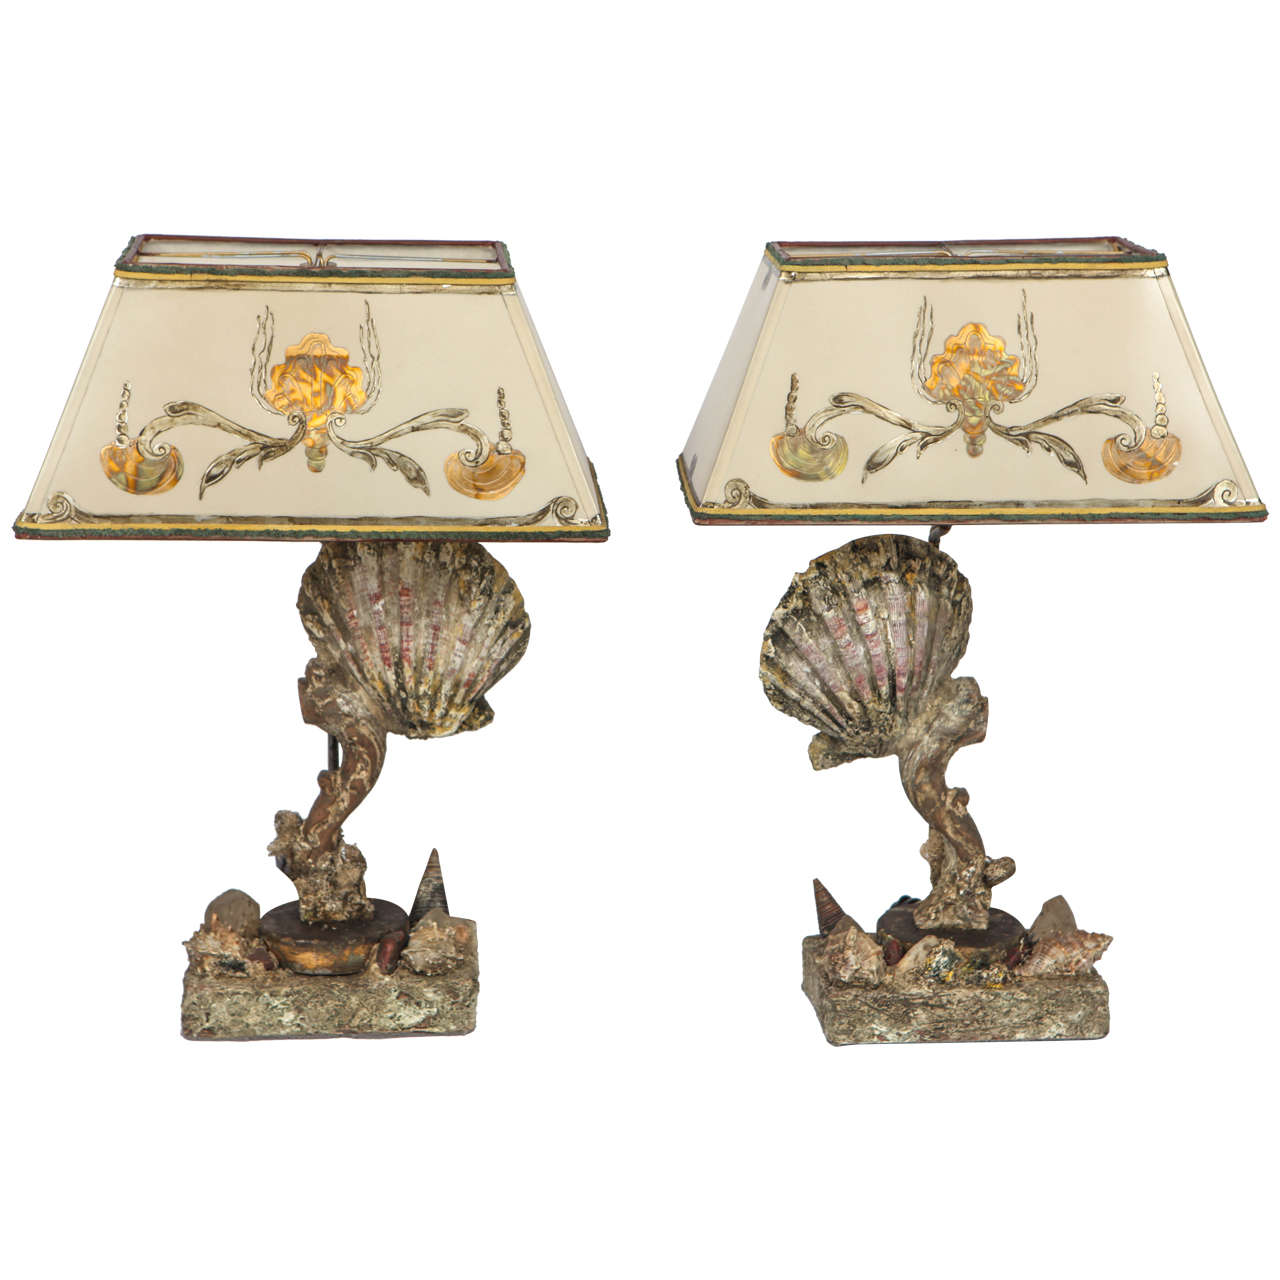 Pair of Seashell Lamps